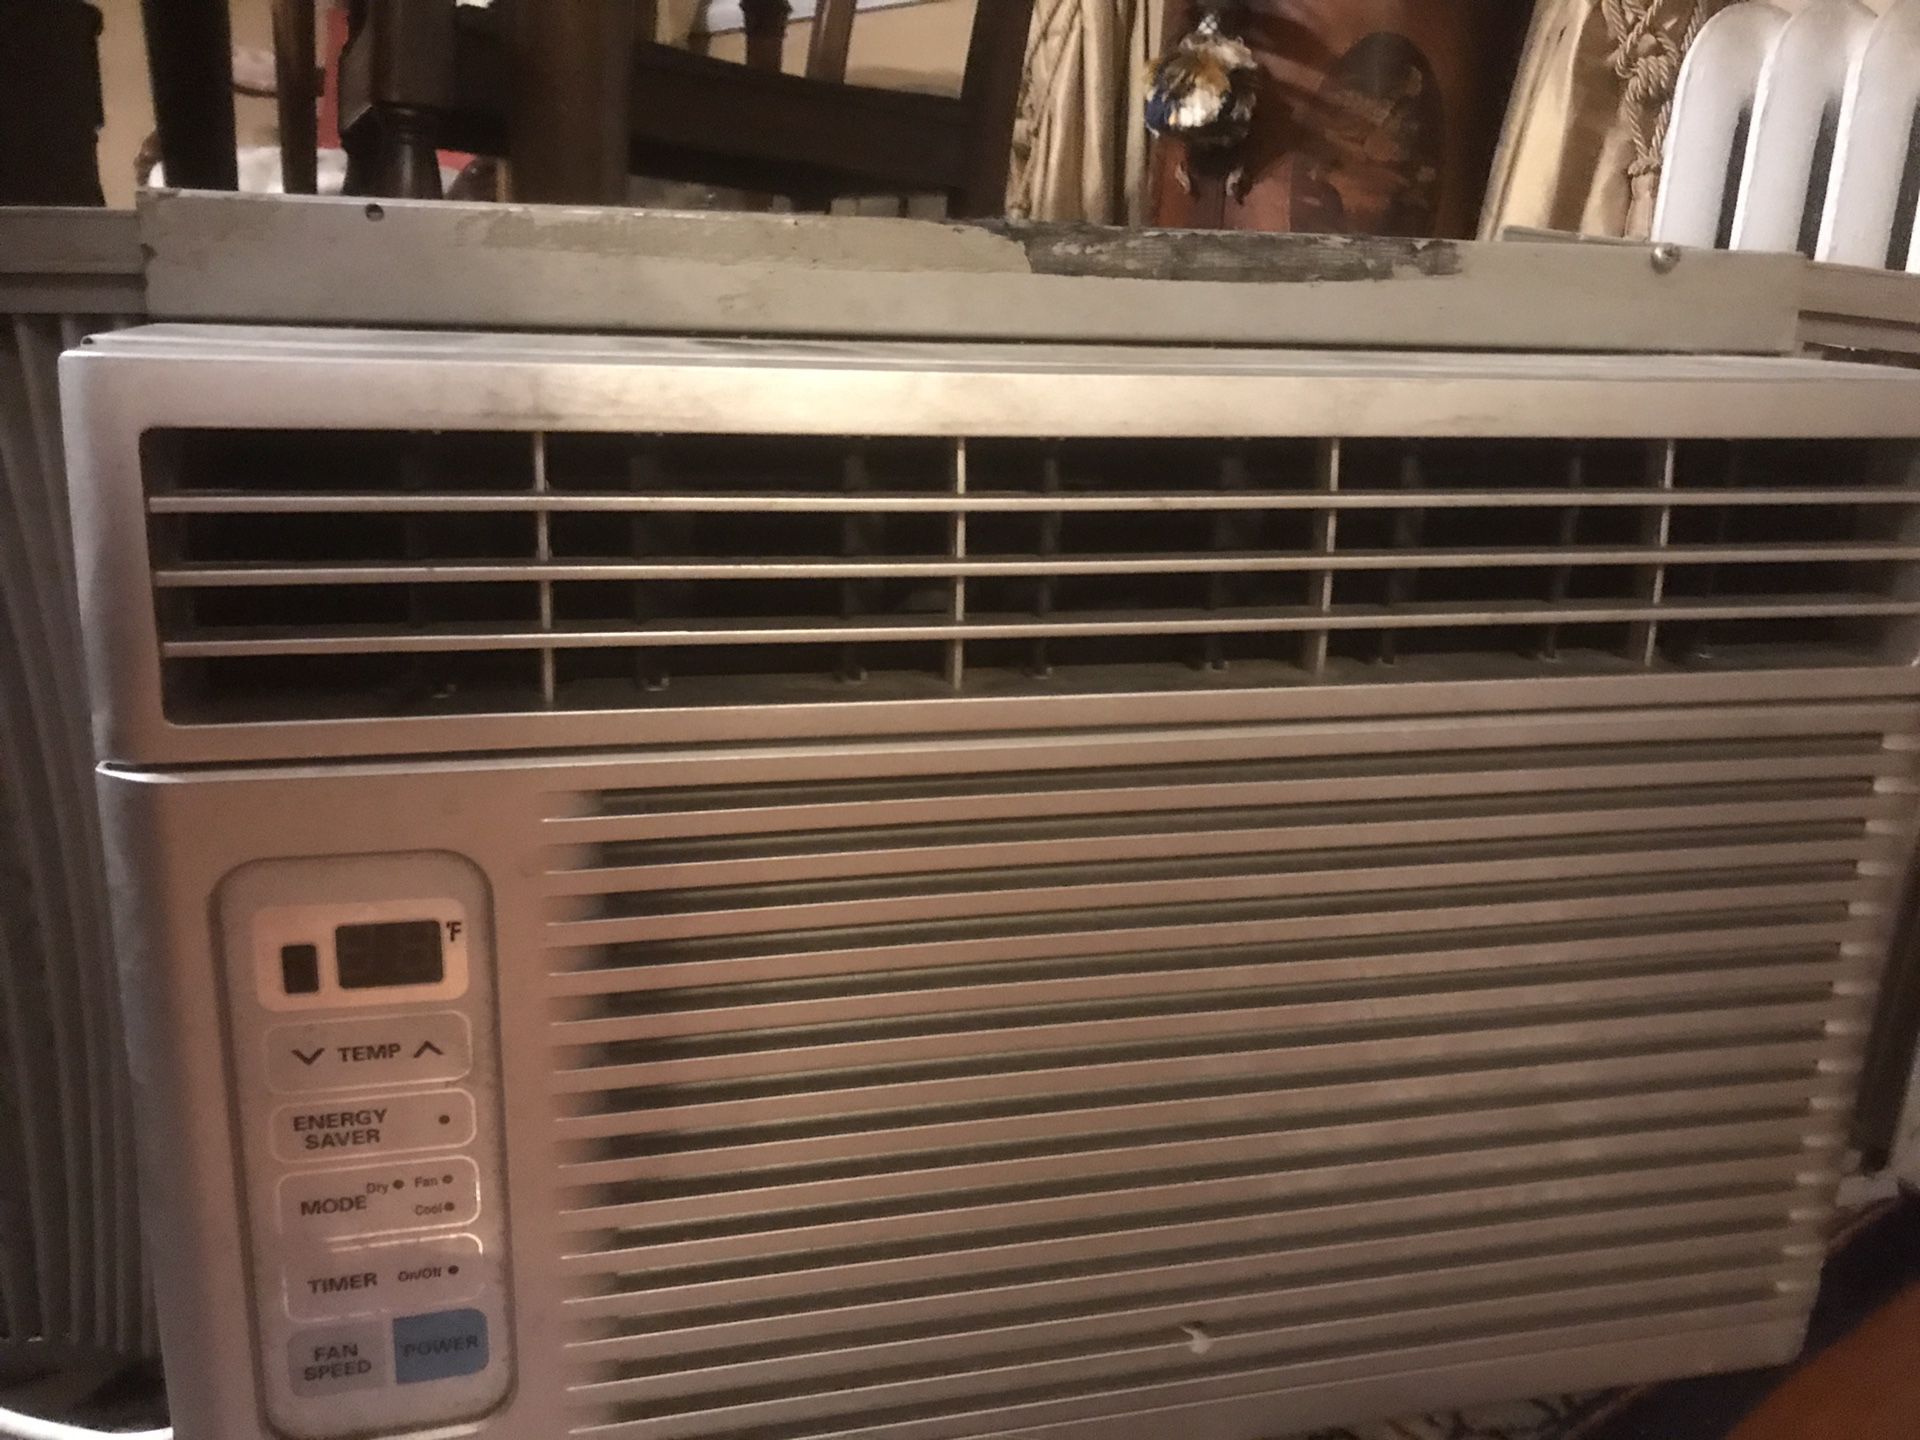 Air condition window unit